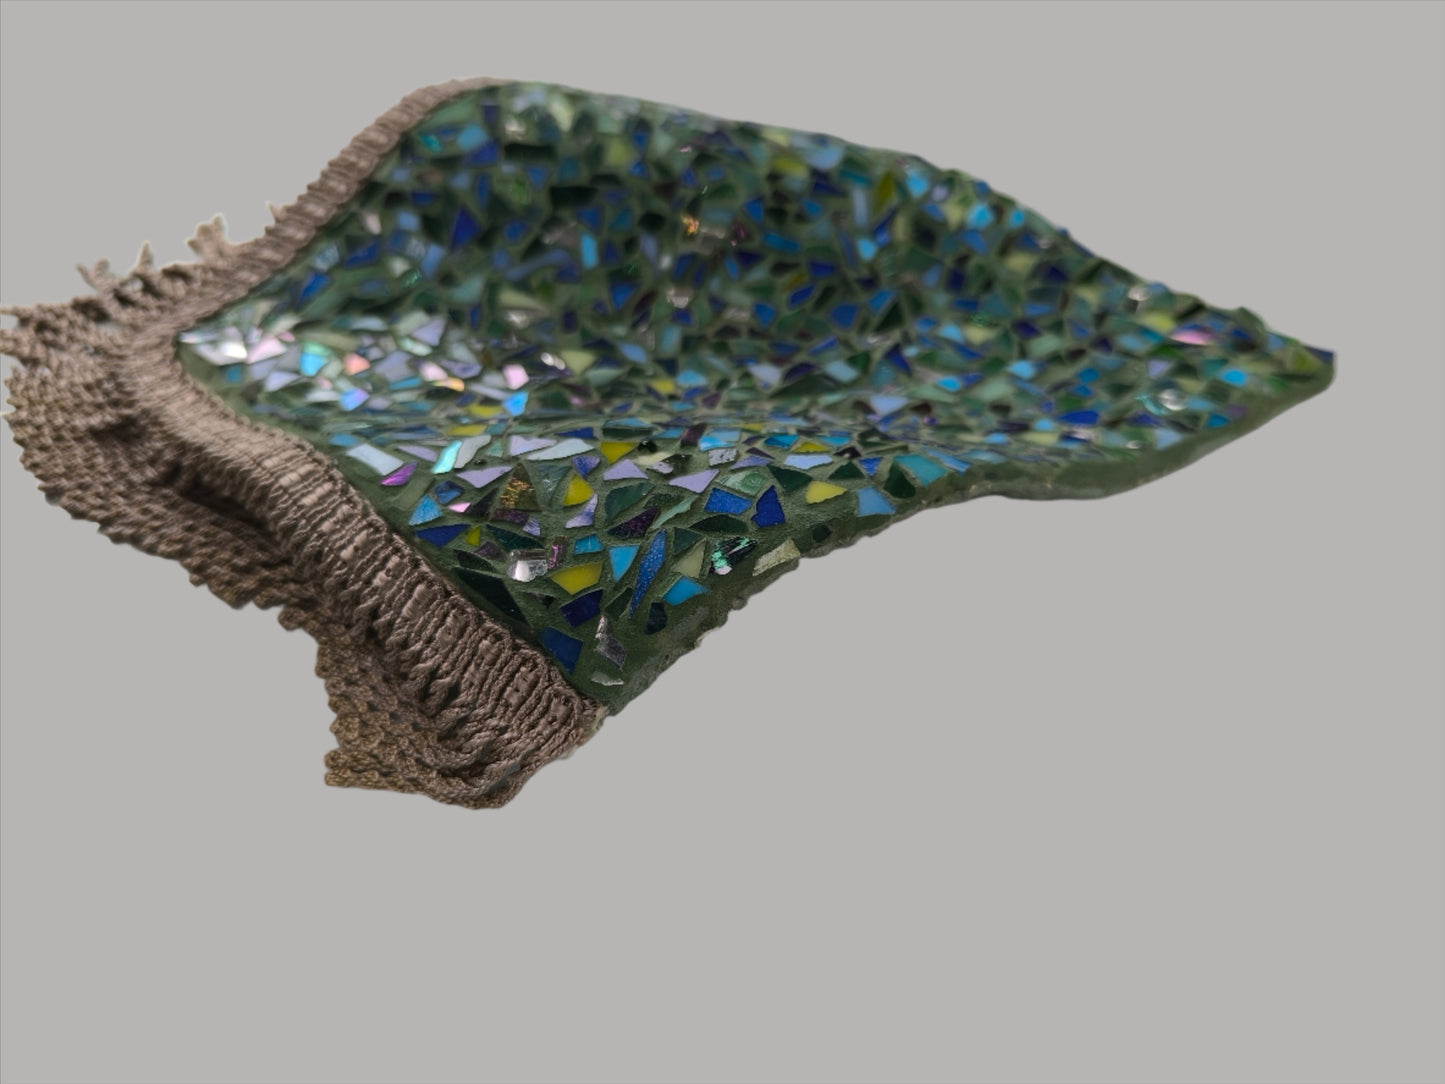 Green/blue glass mosaic cloth